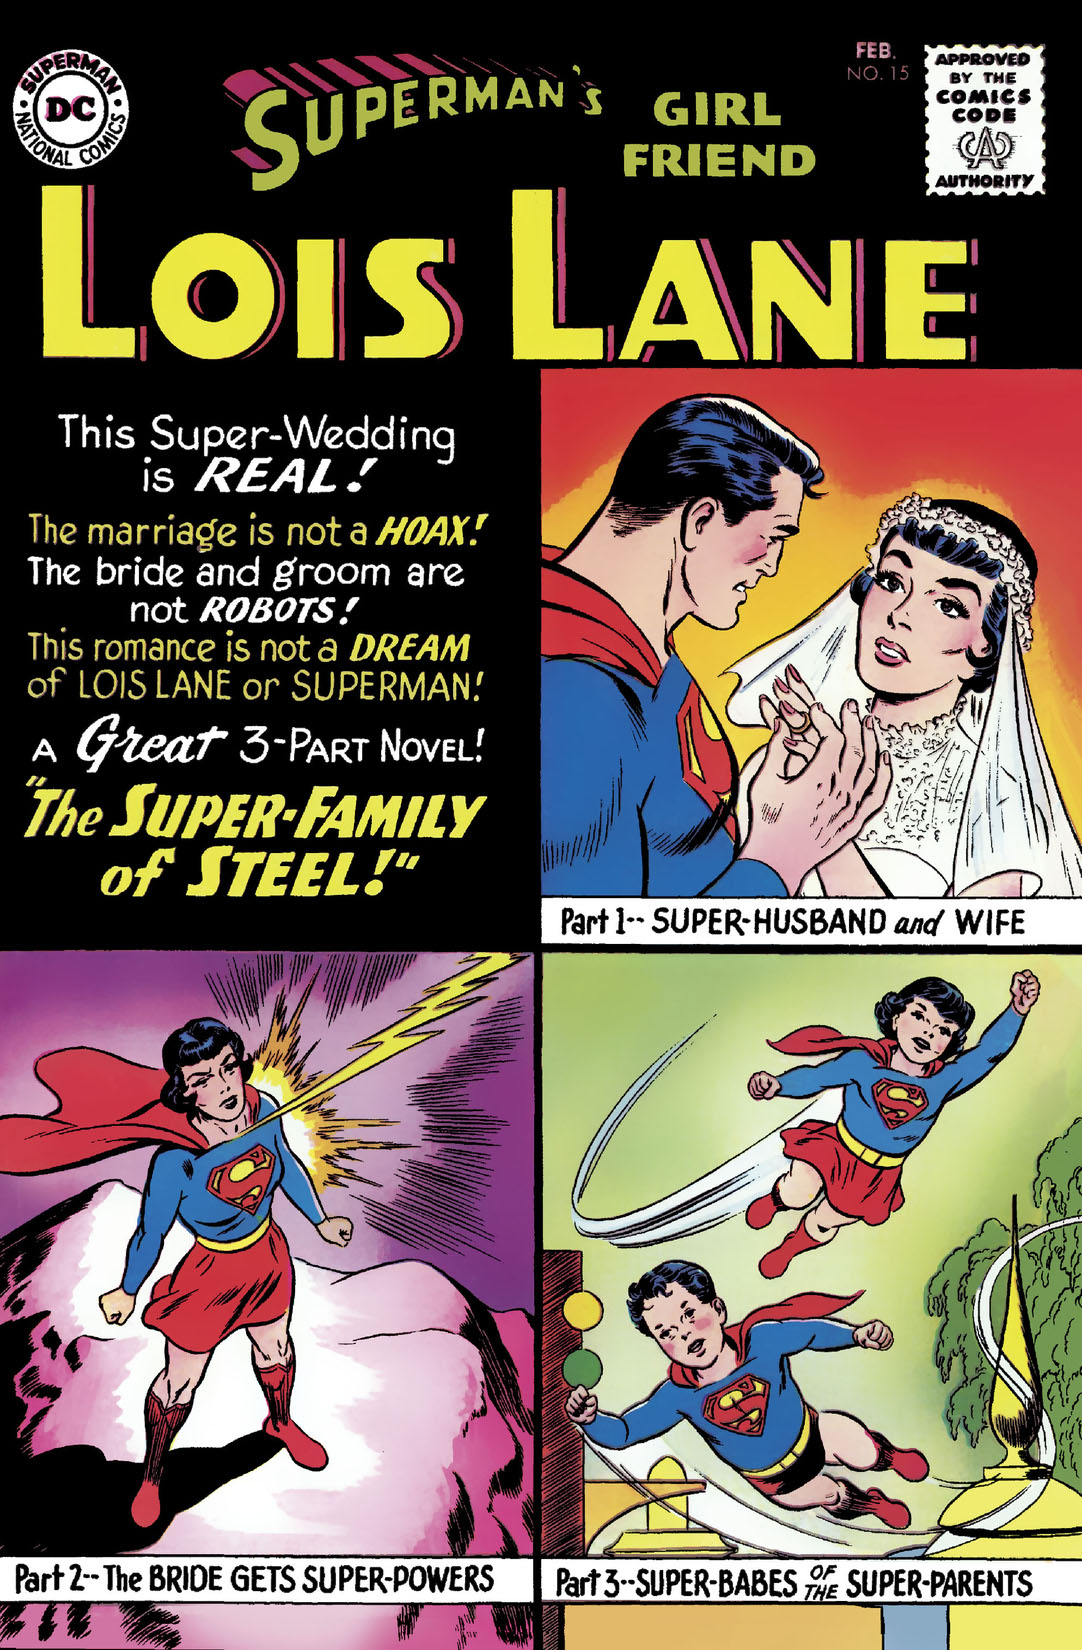 Superman's Girl Friend Lois Lane #15 preview images